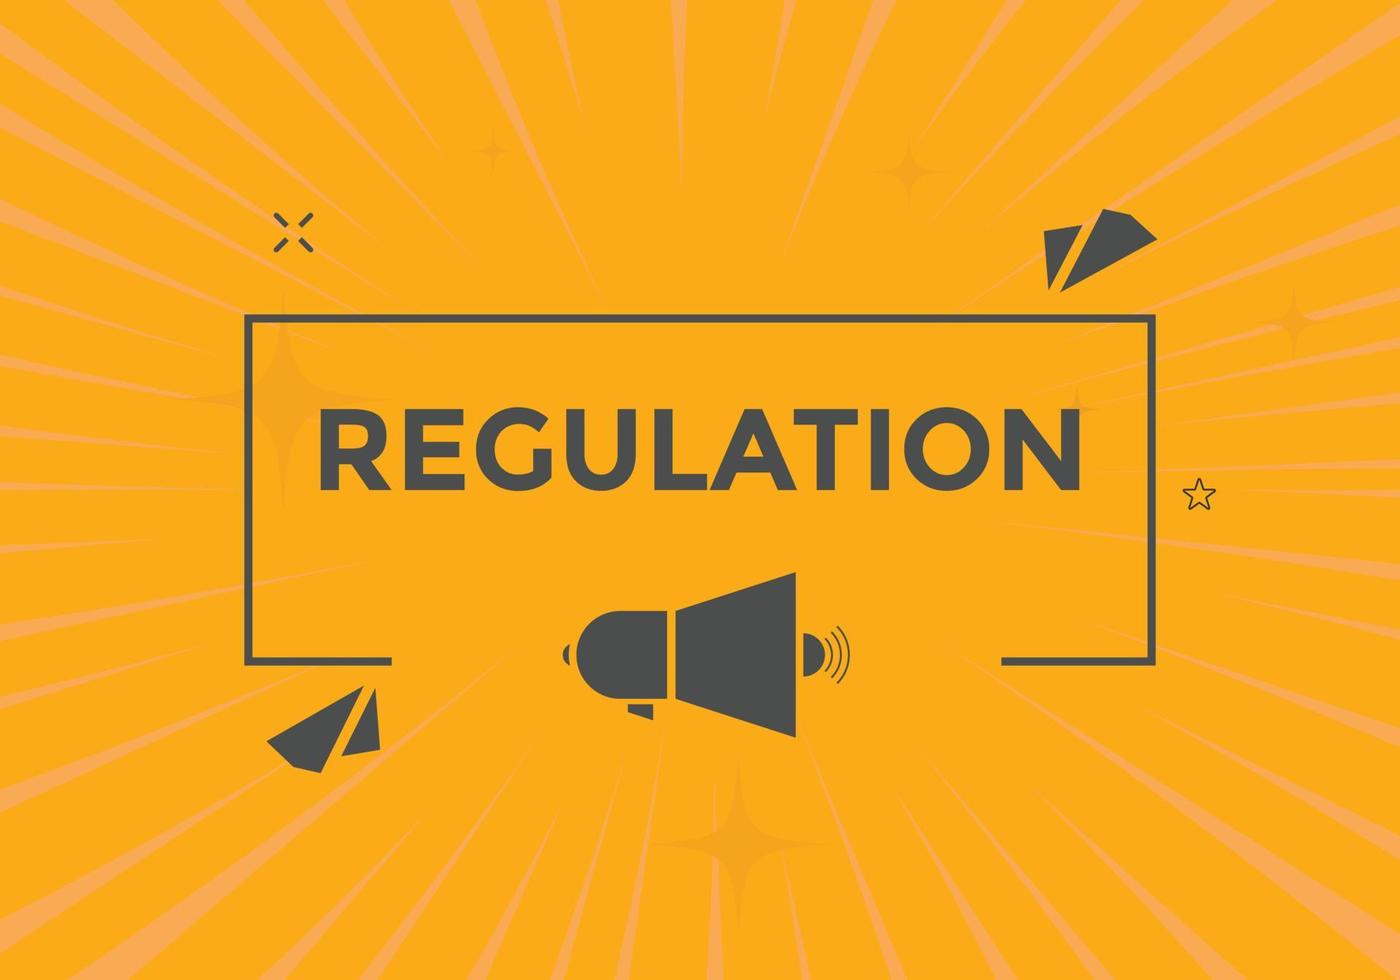 regulation text button. speech bubble. regulation Colorful web banner. vector illustration. regulation label sign template